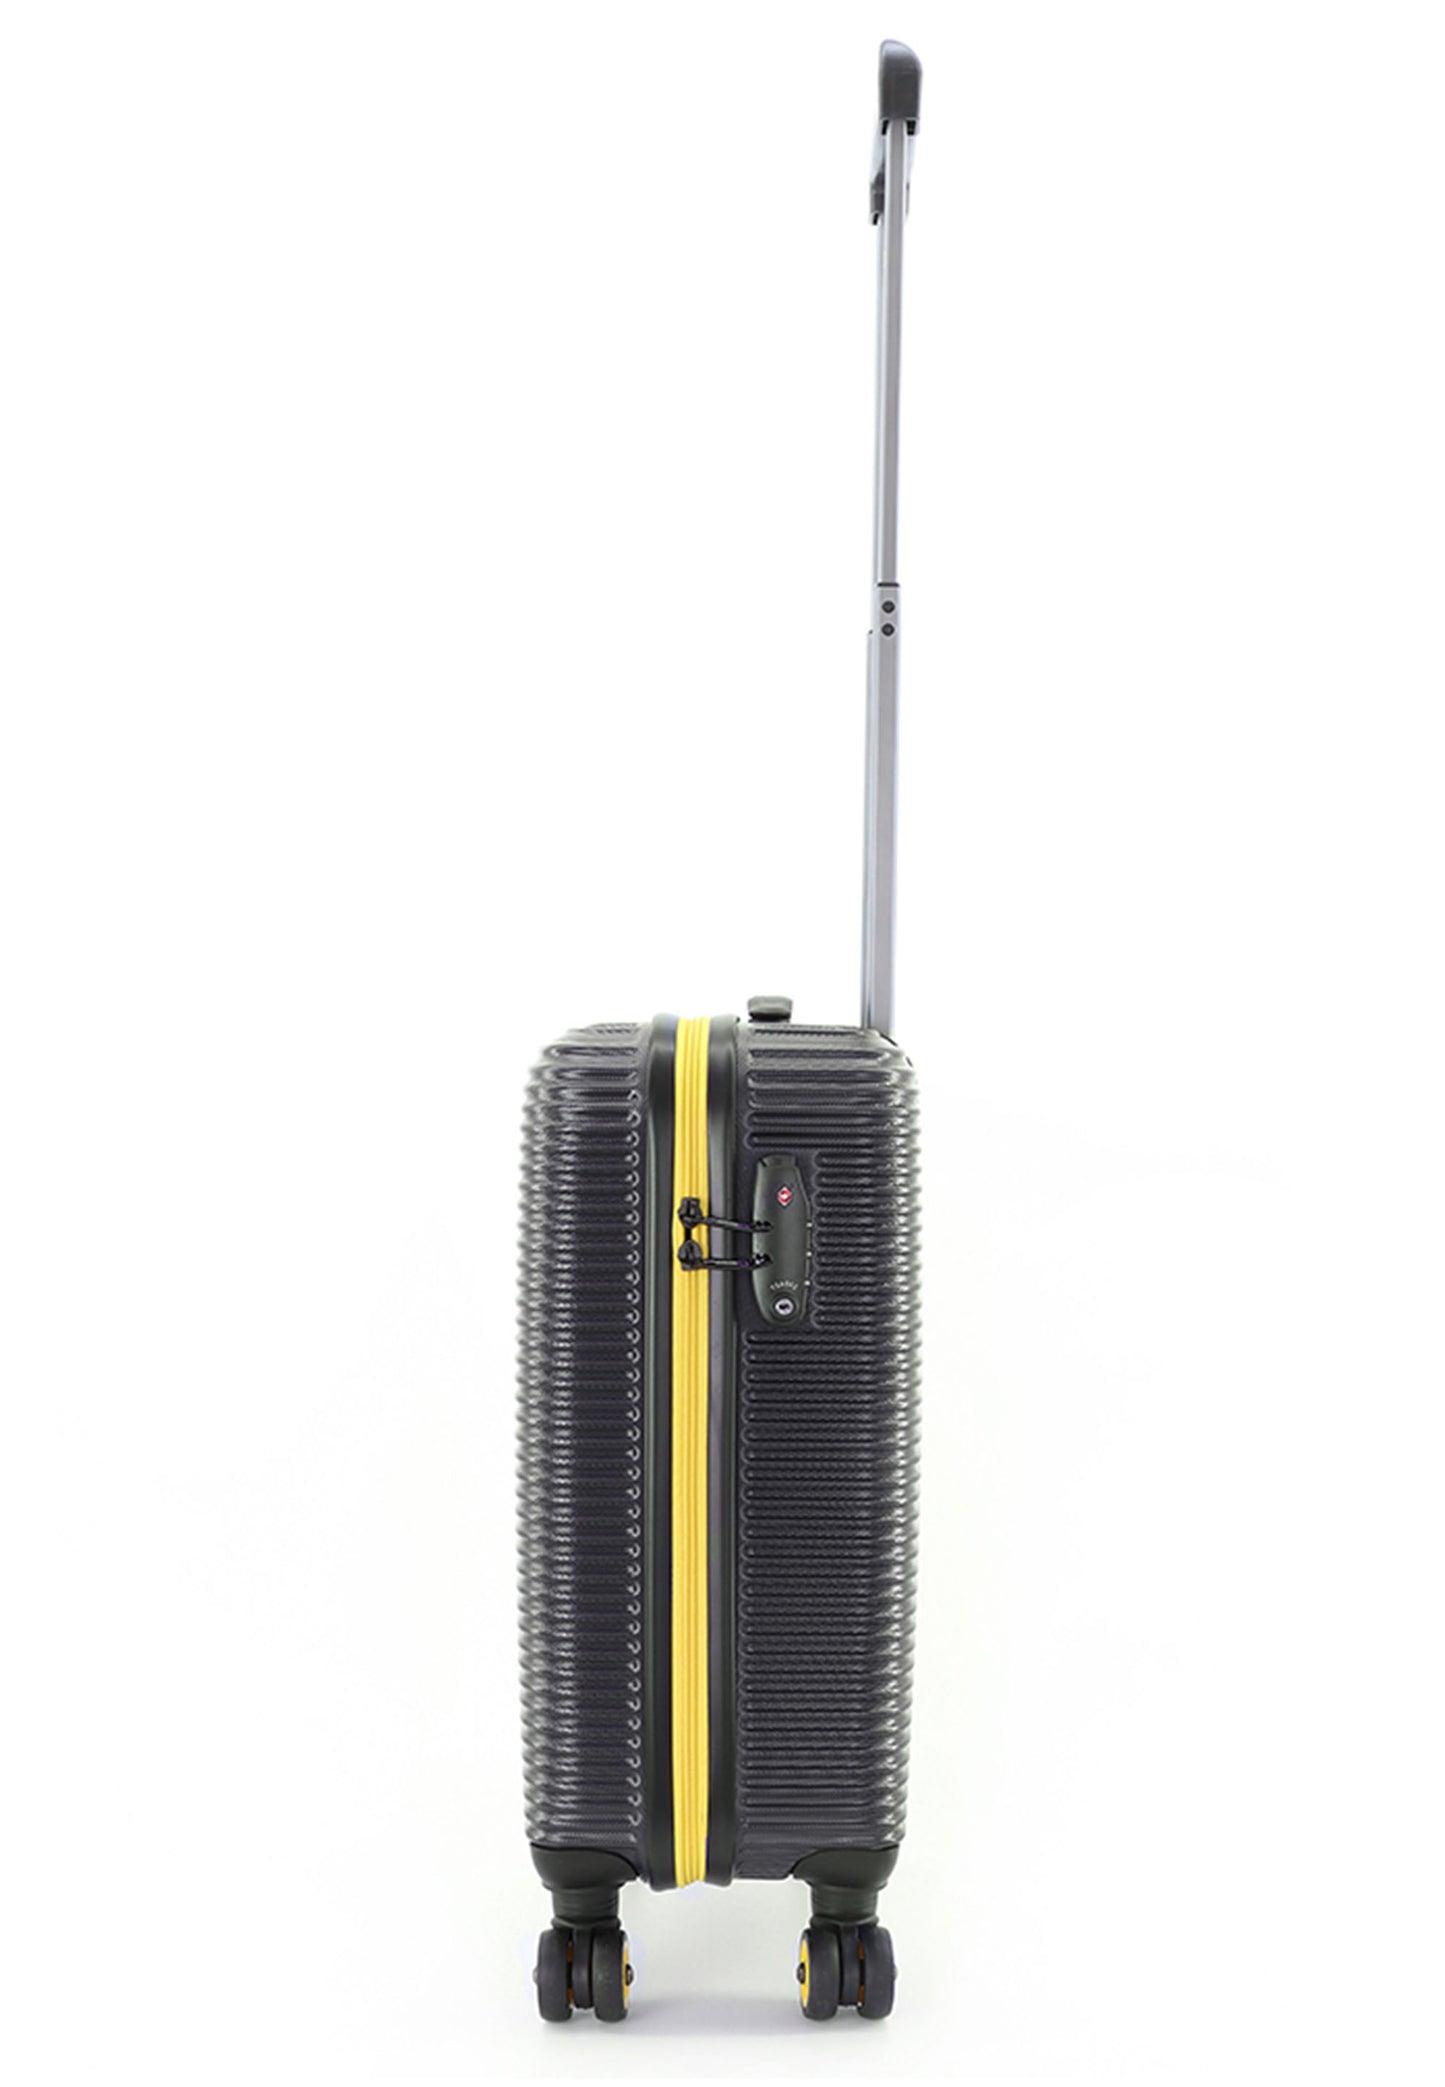 National Geographic Handbagage Harde Koffer / Trolley / Reiskoffer - 55 cm (Small) - Abroad - Zwart